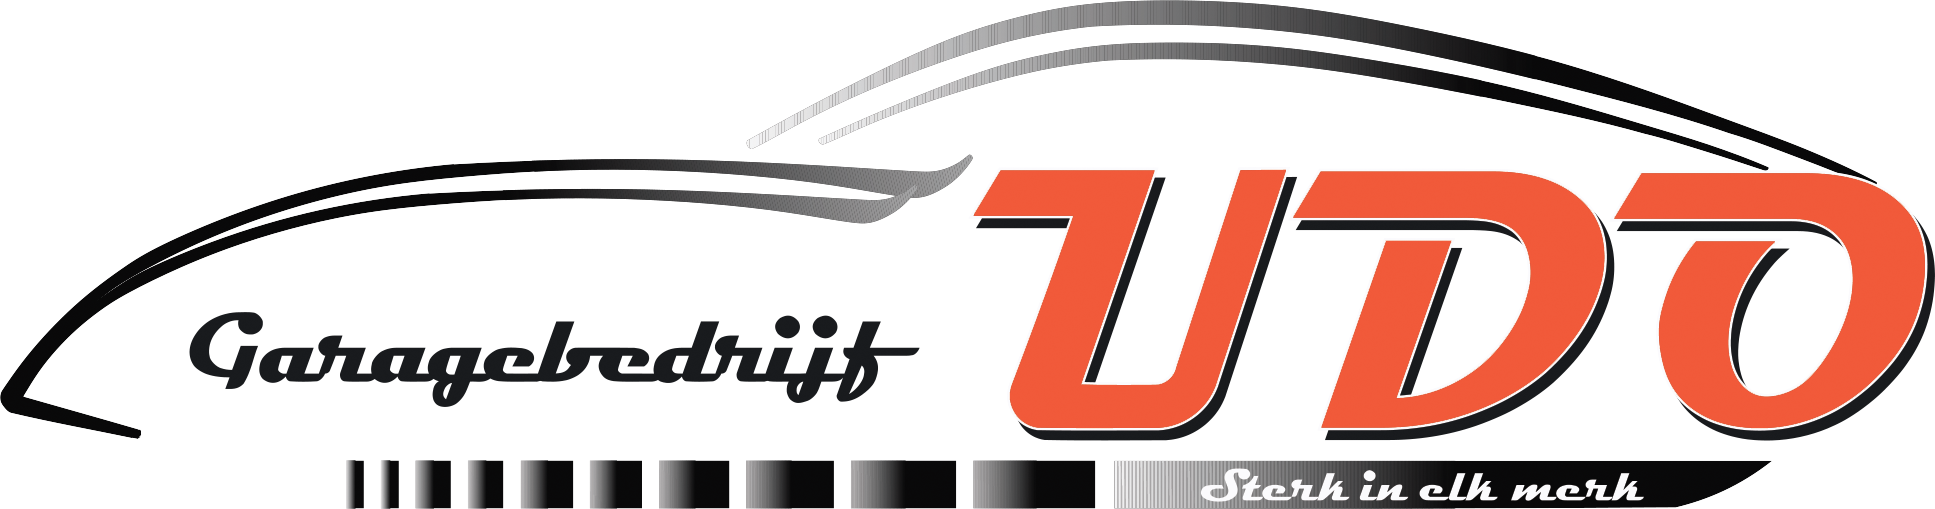 Garagebedrijf Udo logo